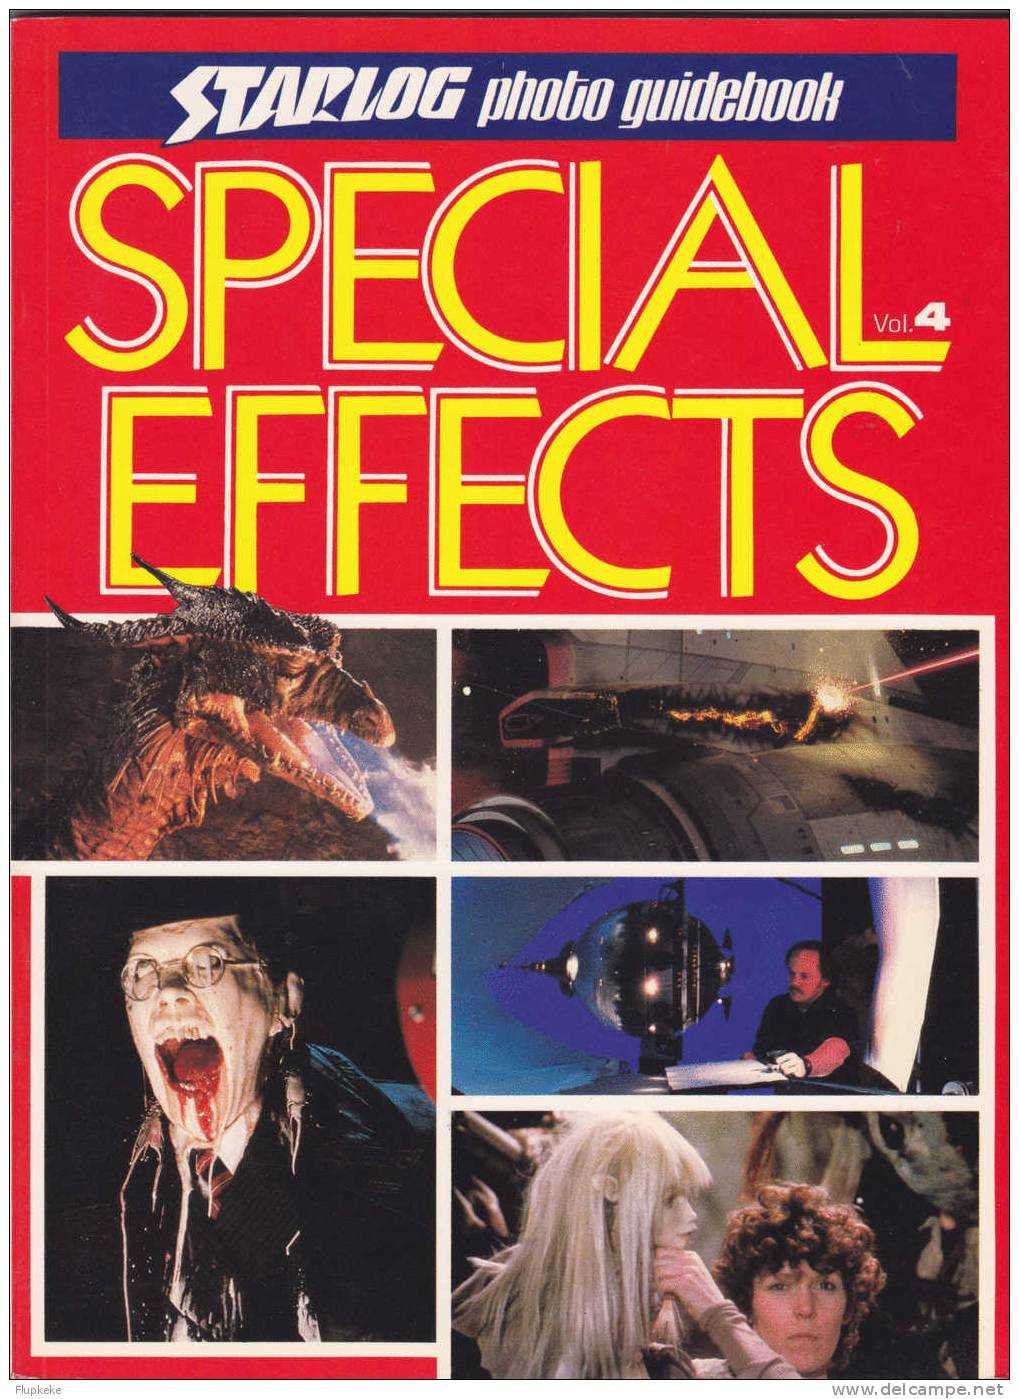 Starlog Photo Guidebook Special Effect Volume 4 David Hutchison Starlog Press - Entretenimiento